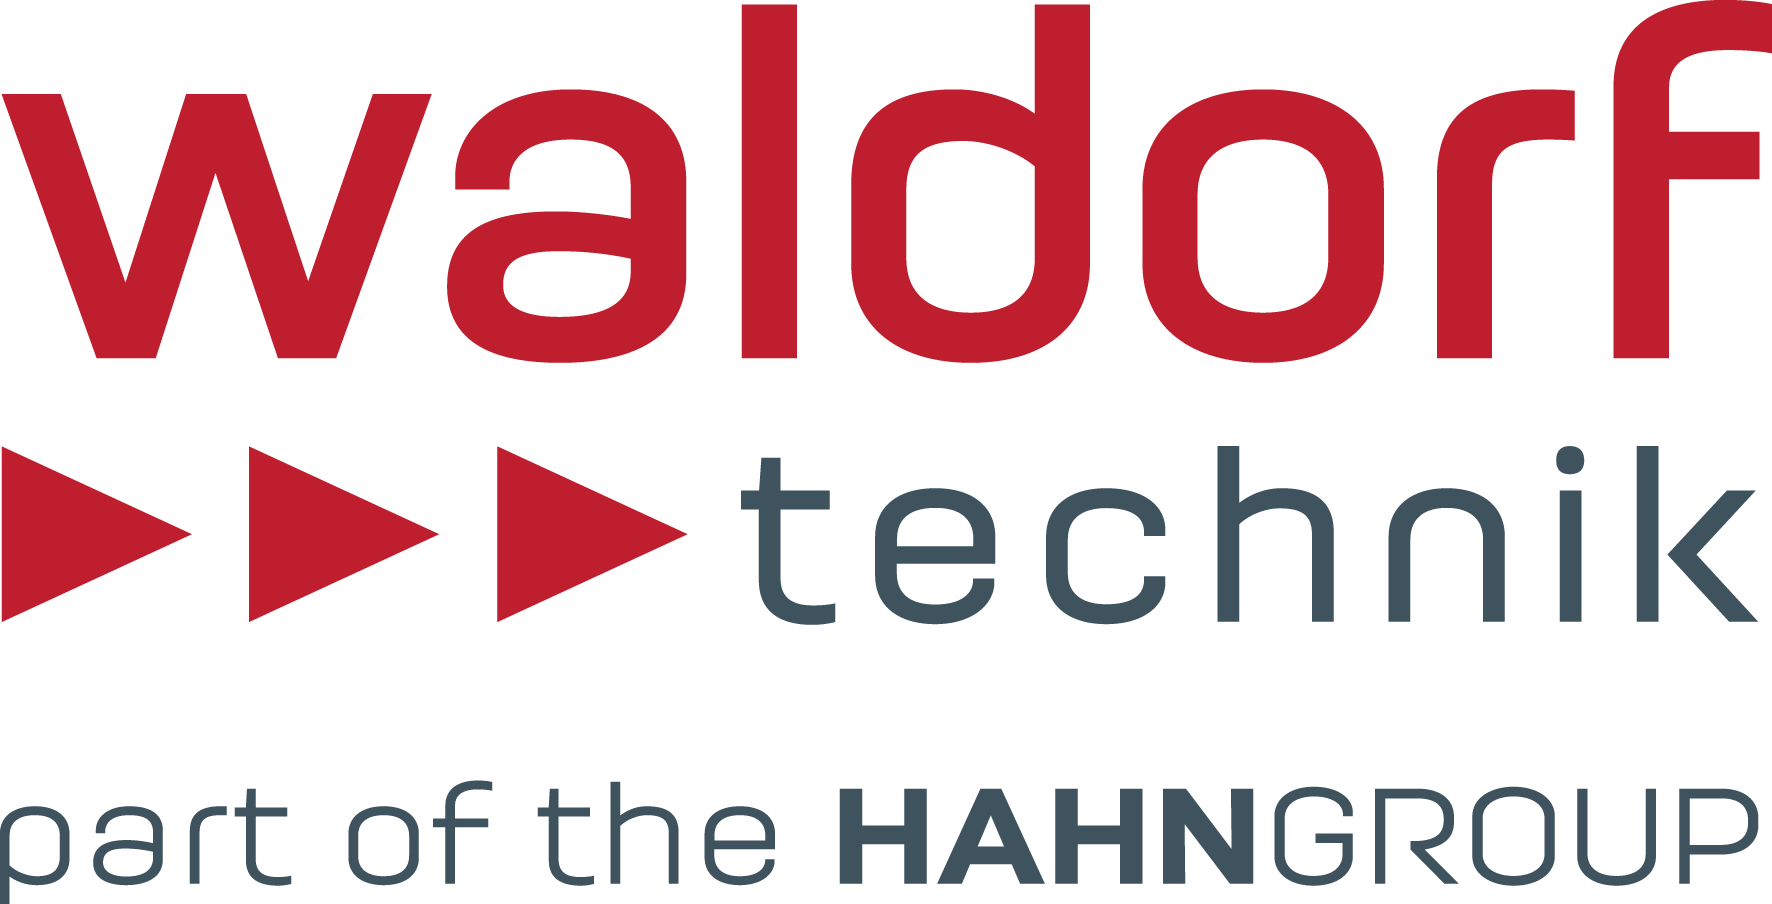 Waldorf Technik GmbH